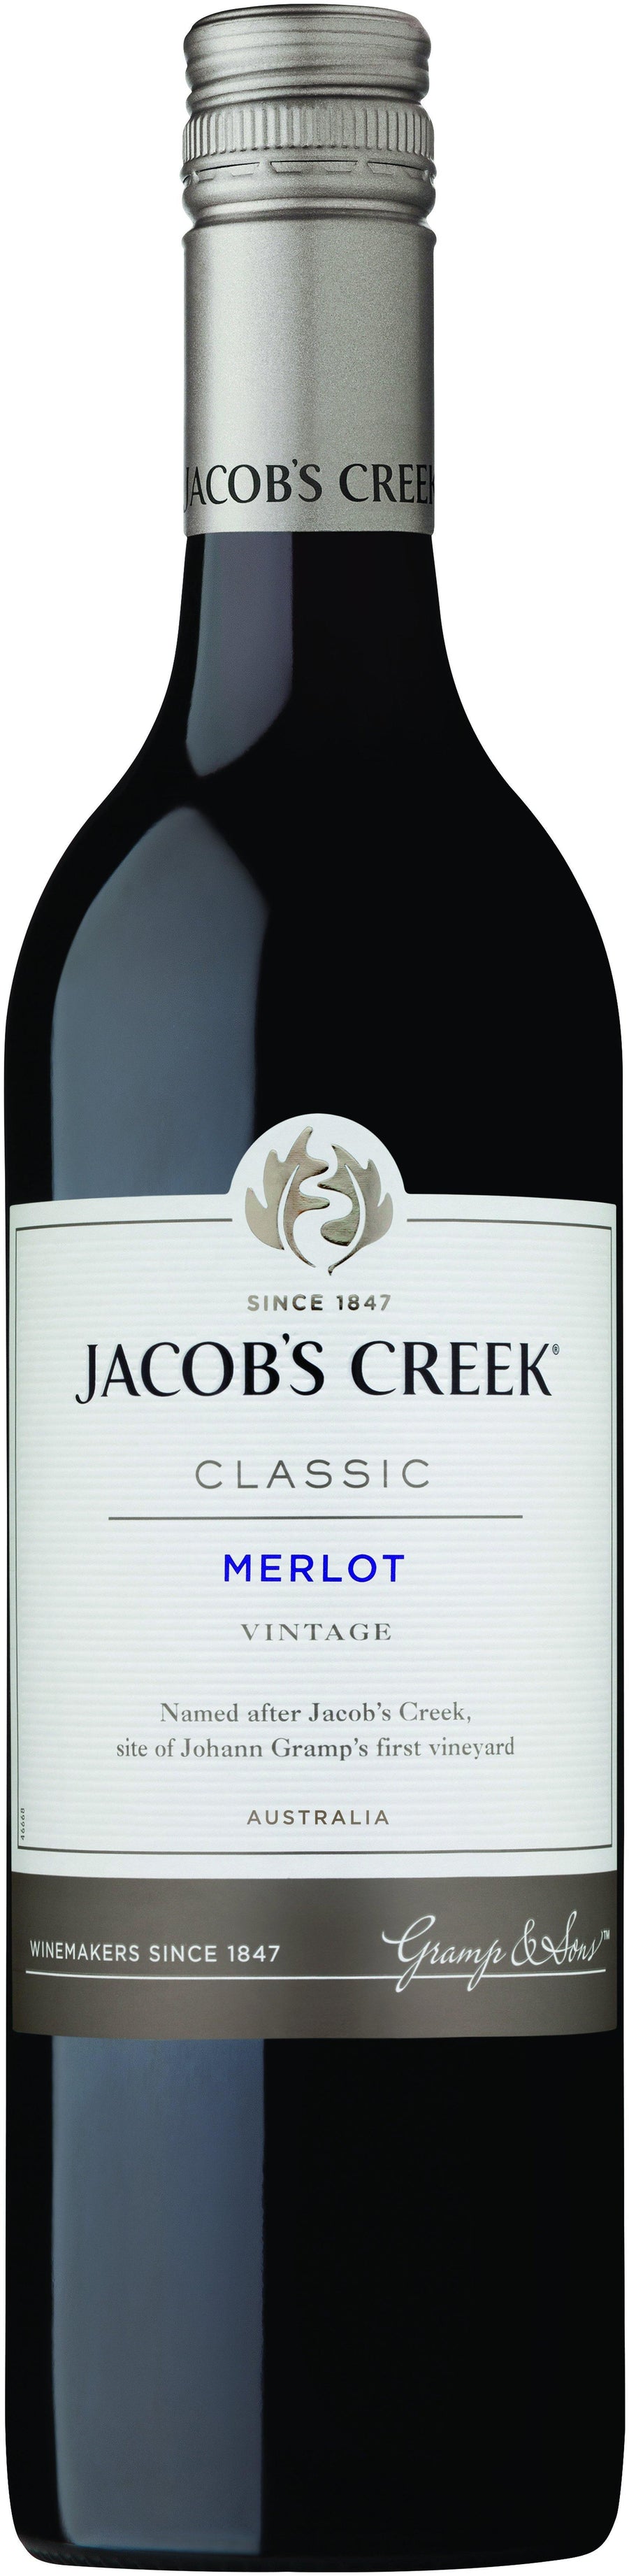 Jacobs Creek Merlot - Liquor Library